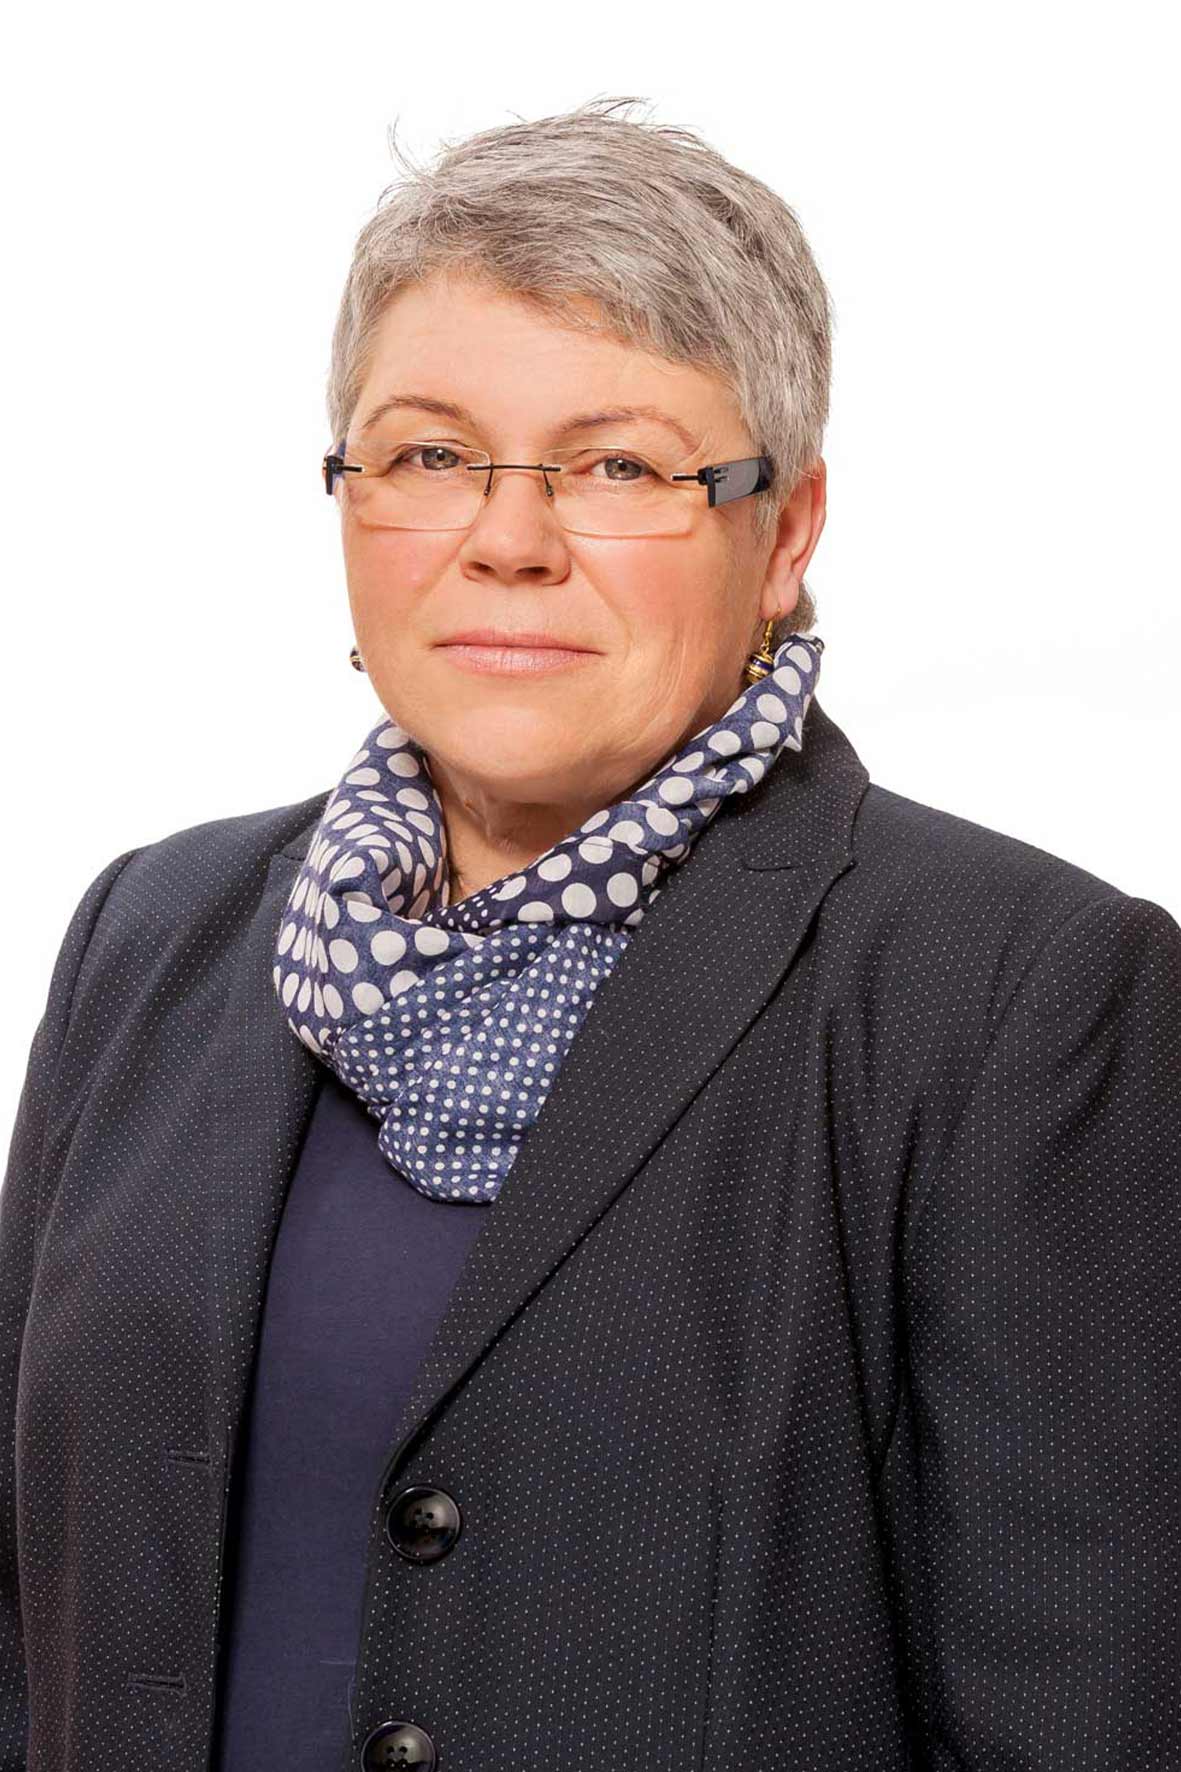 Karin Görg